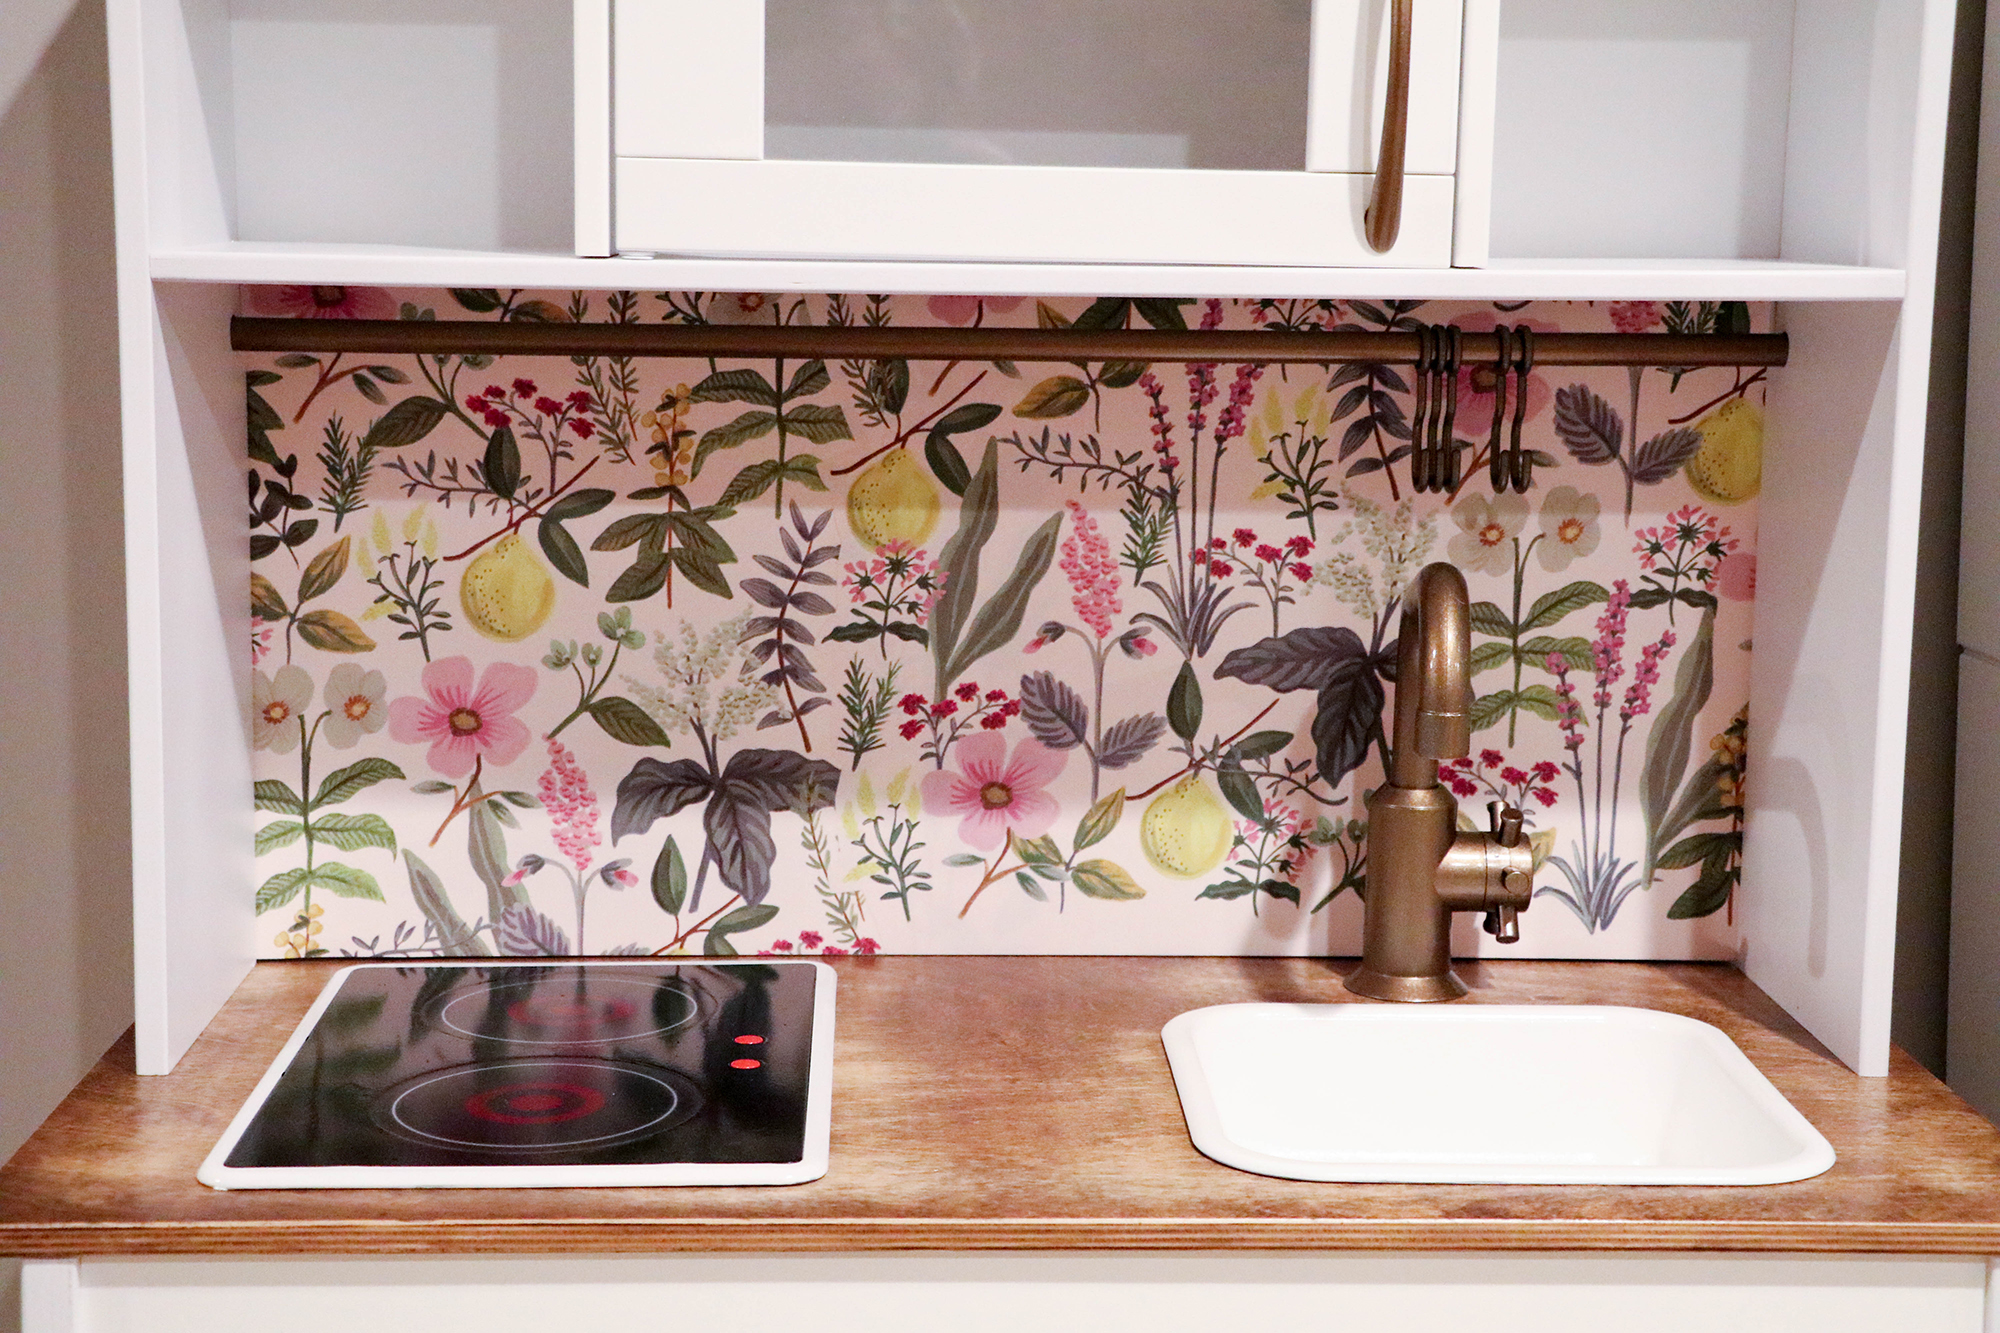 IKEA Hack: DUKTIG Children’s Play Kitchen – Wallpaper & Backsplash